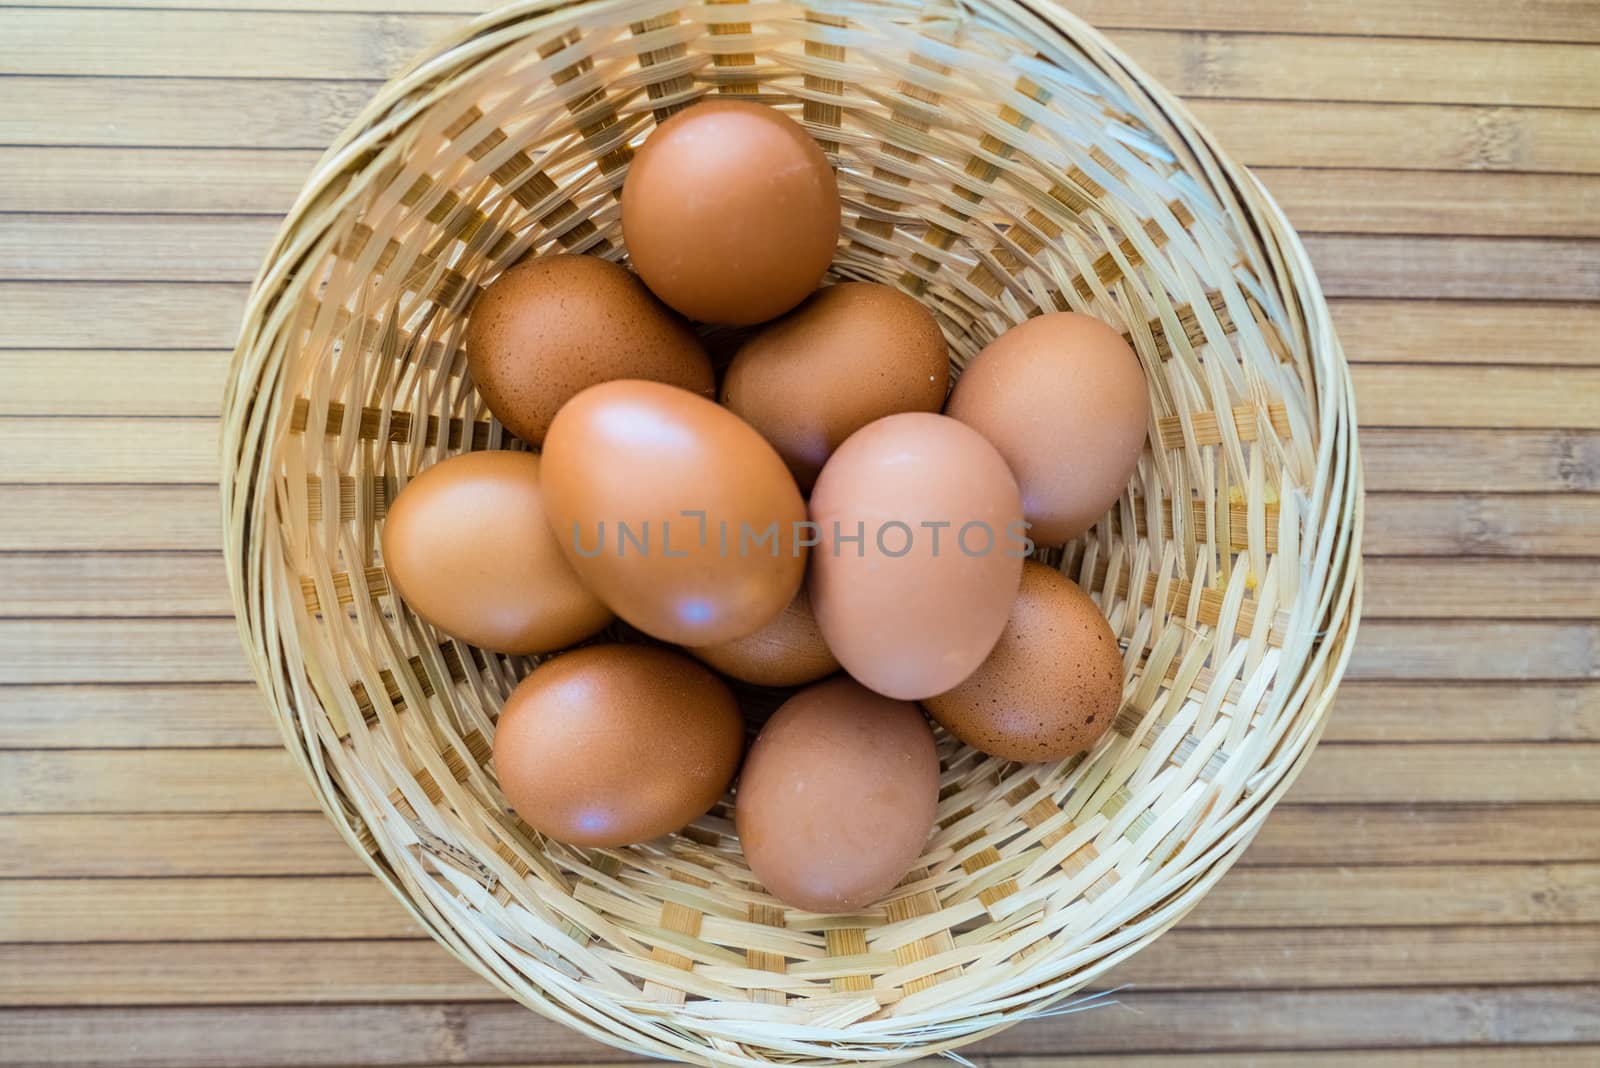 Fresh eggs in the basket by jcdiazhidalgo